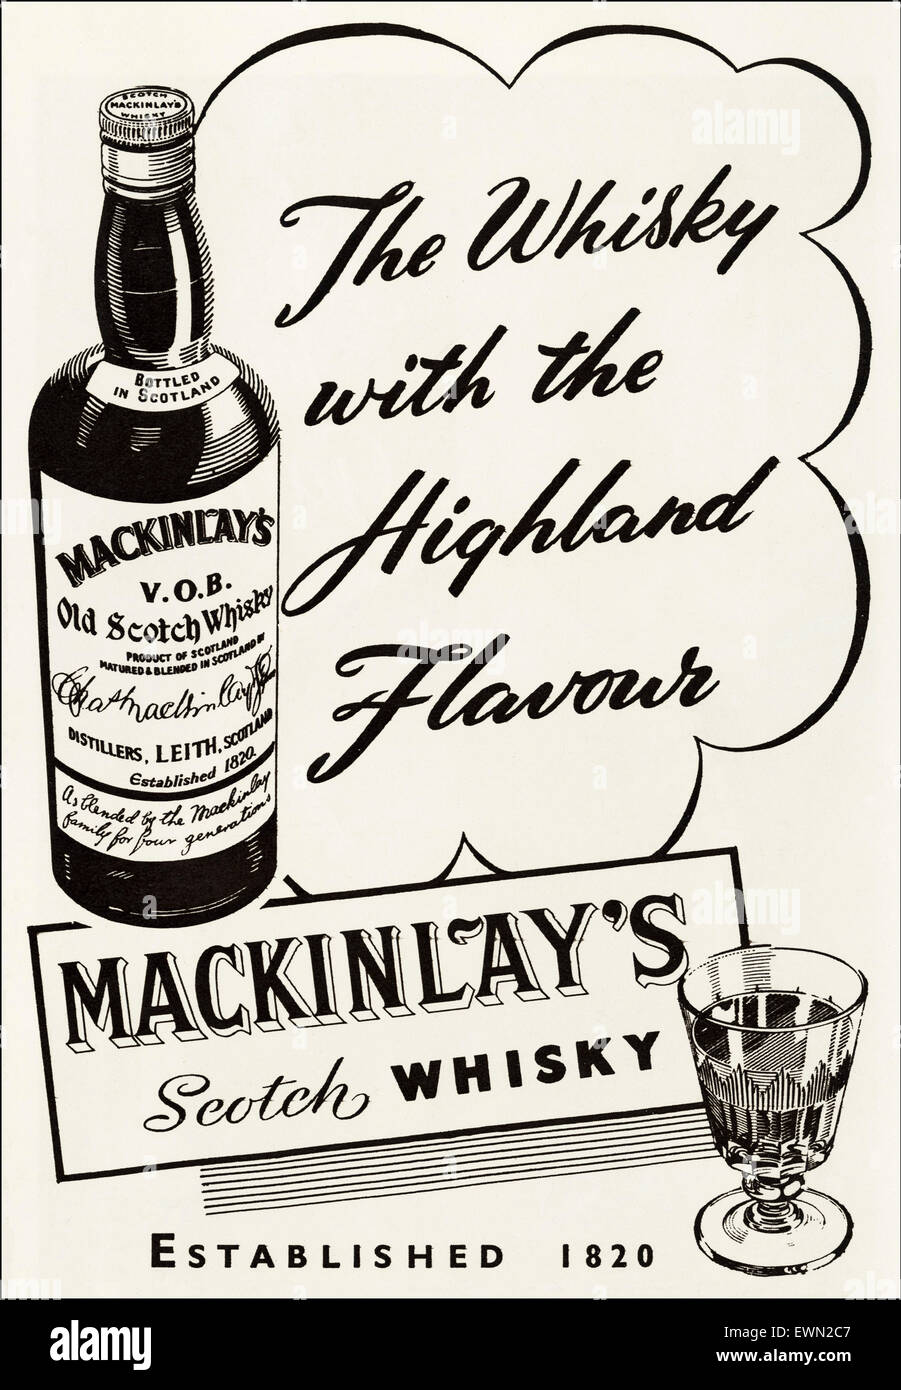 1950s advertisement circa 1954 magazine advert for Mackinlays Scotch Whisky Stock Photo